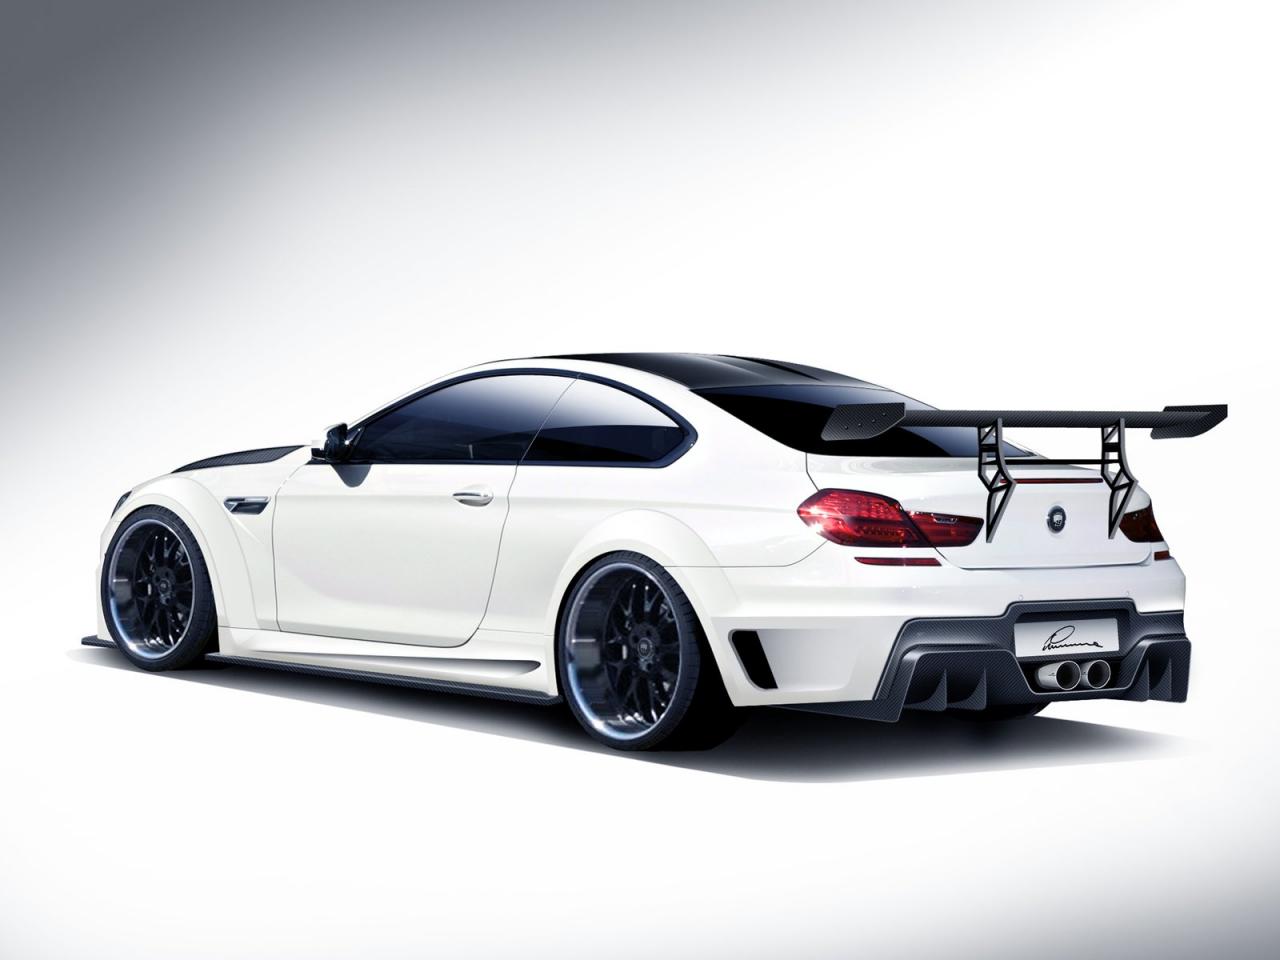 BMW CLR 6 M by Lumma Design